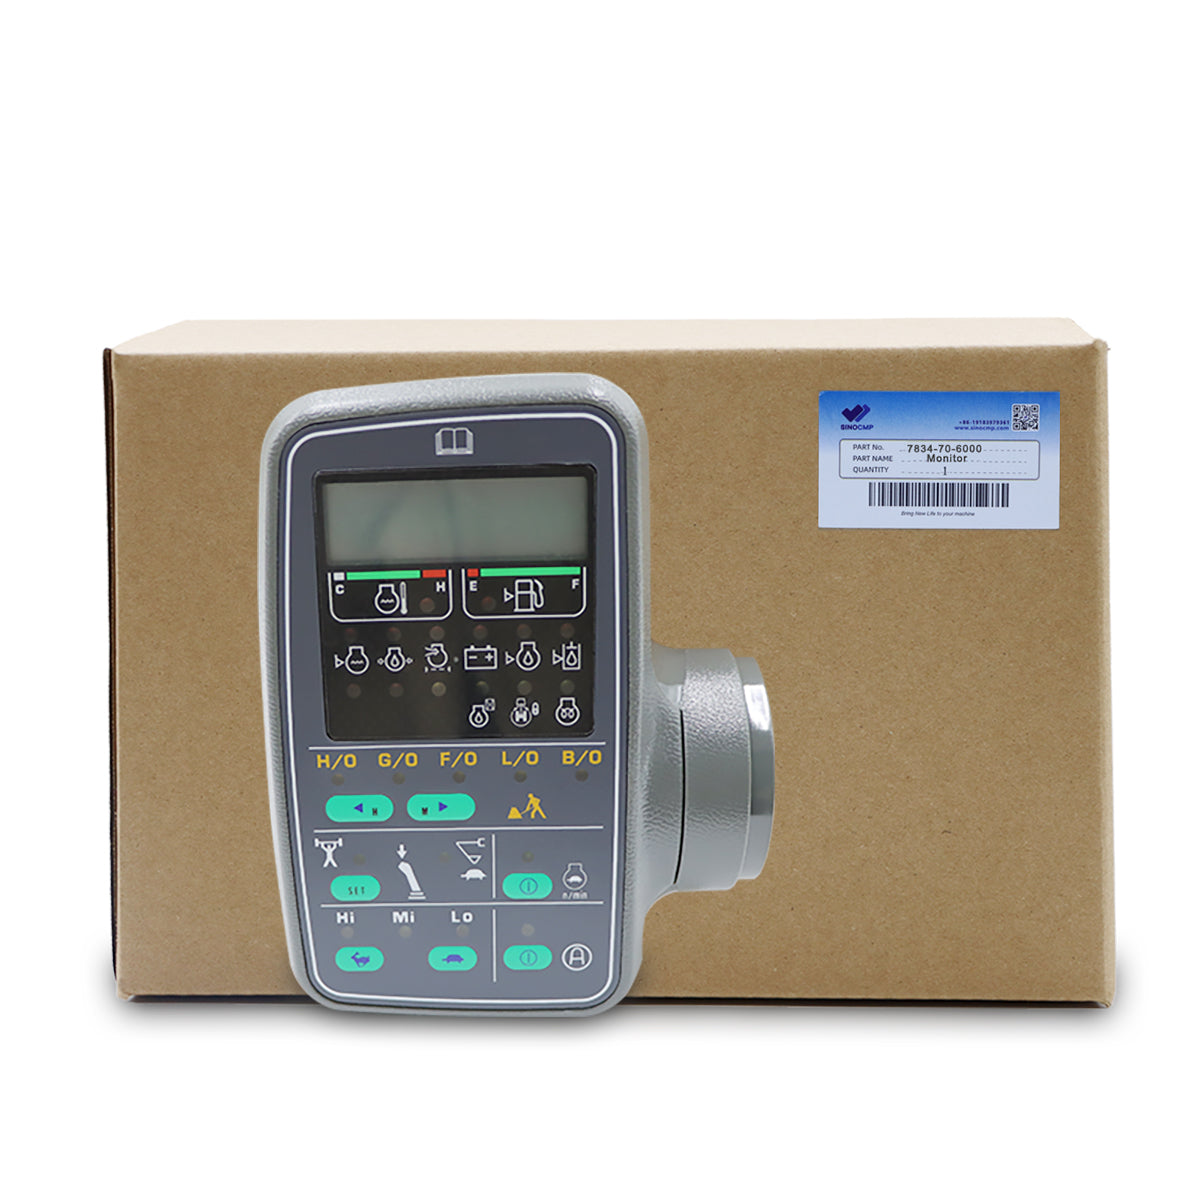 7834-70-6000 7834-70-6003 Monitor for Komatsu PC100-6 PC120-6 PC200-6 - Sinocmp